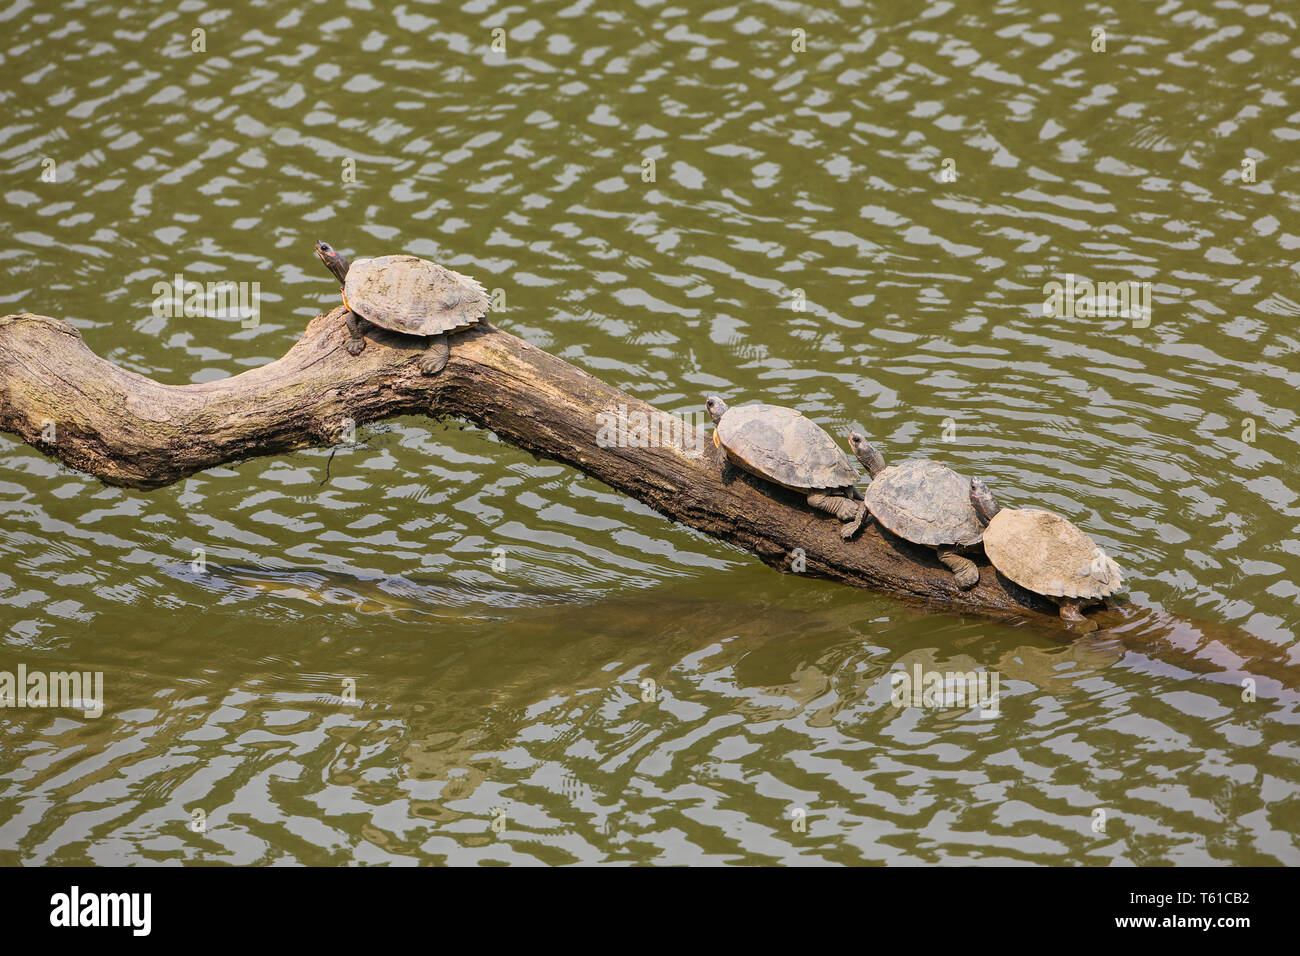 Roofed Turtles resting on a wooden log - photographed at Kaziranga National Park (India) Stock Photo